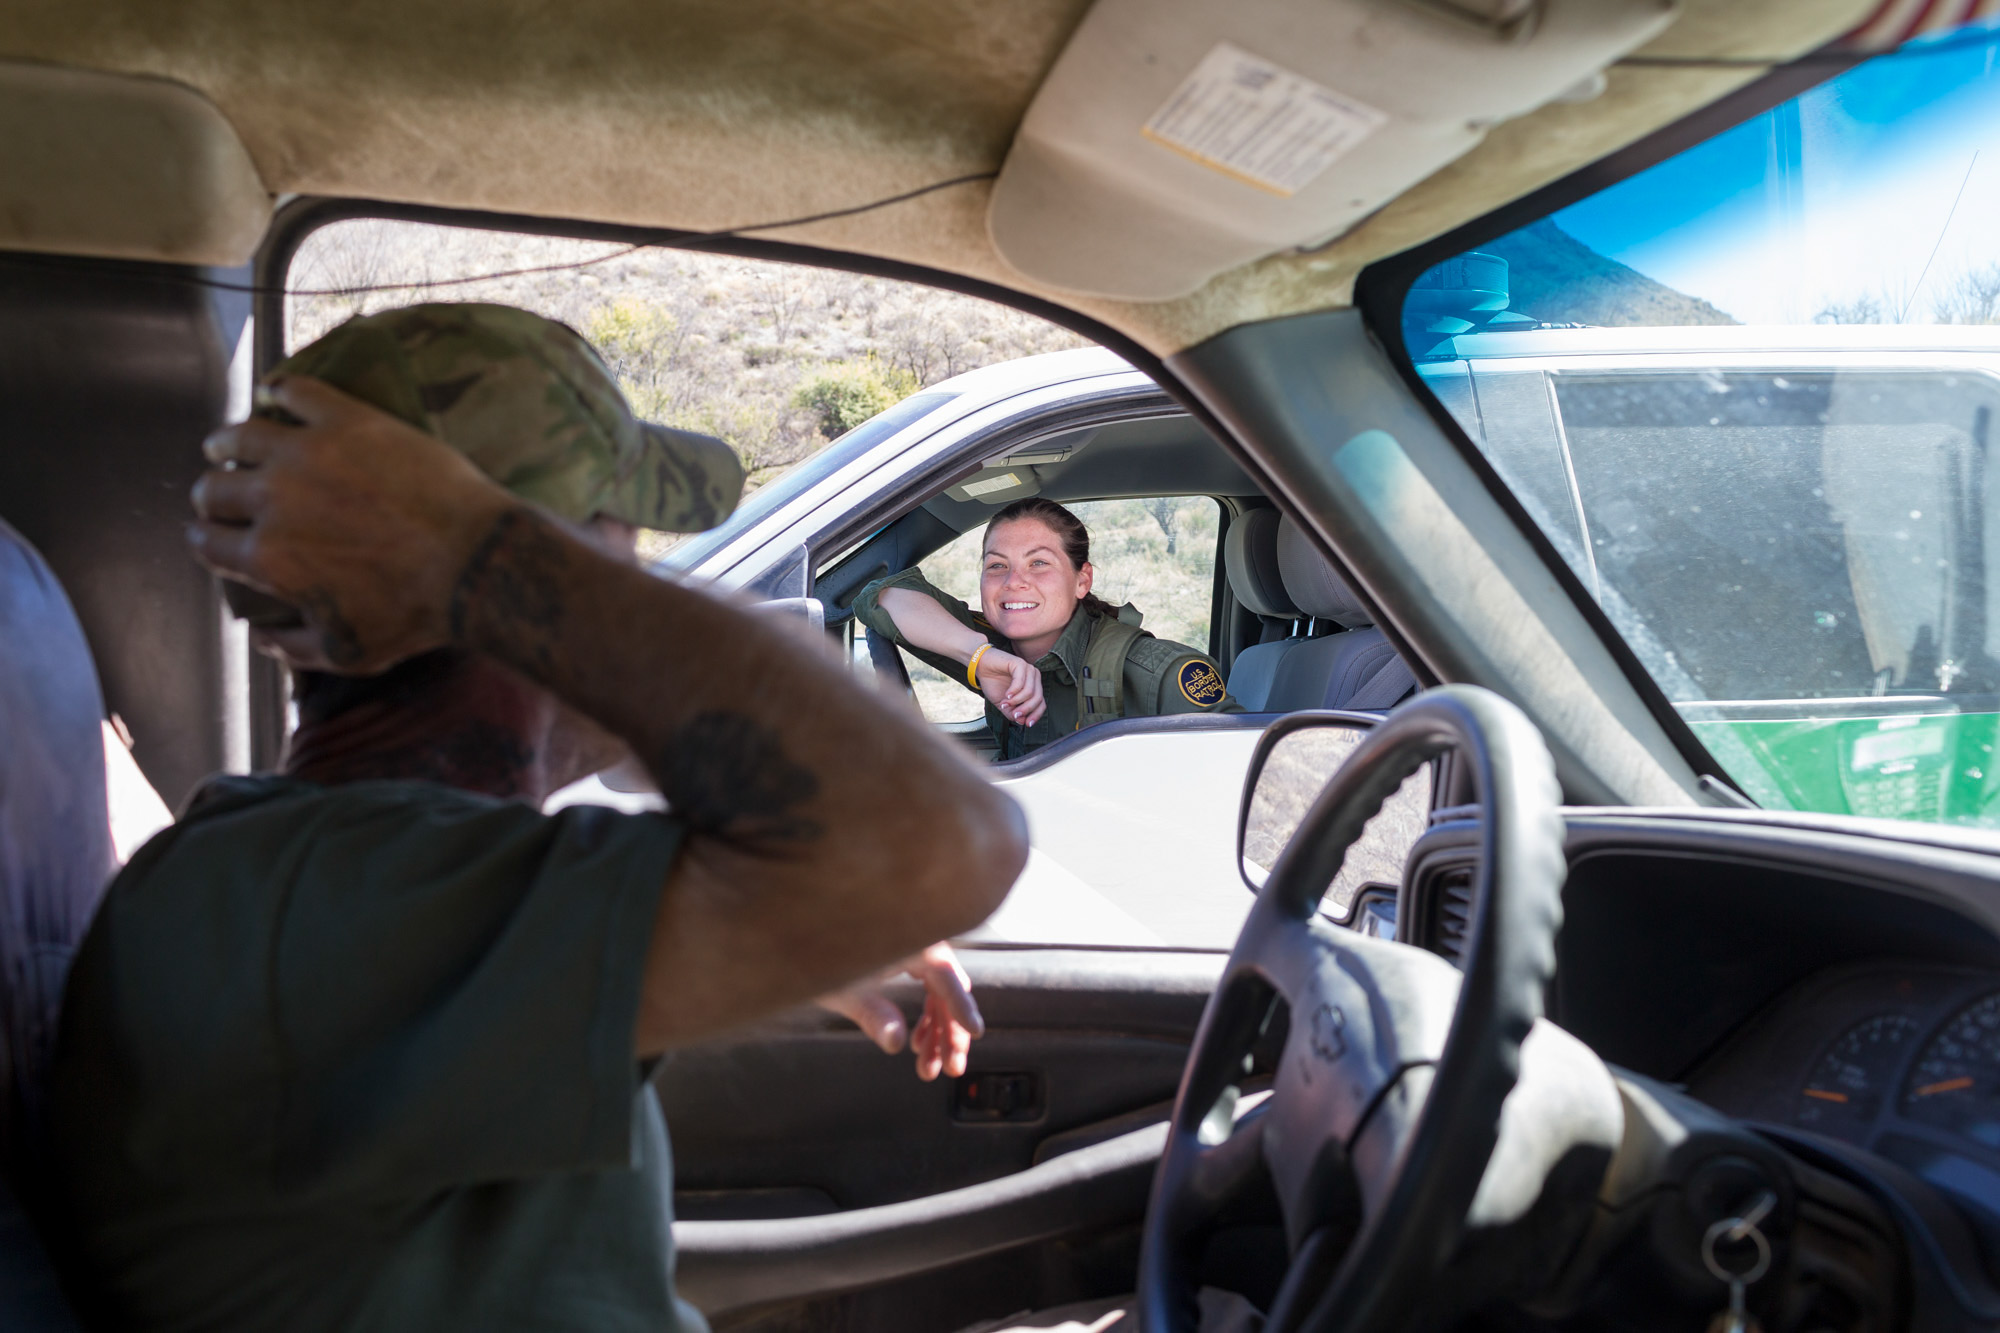 Tim Foley, Arizona Border Recon, Vigilante